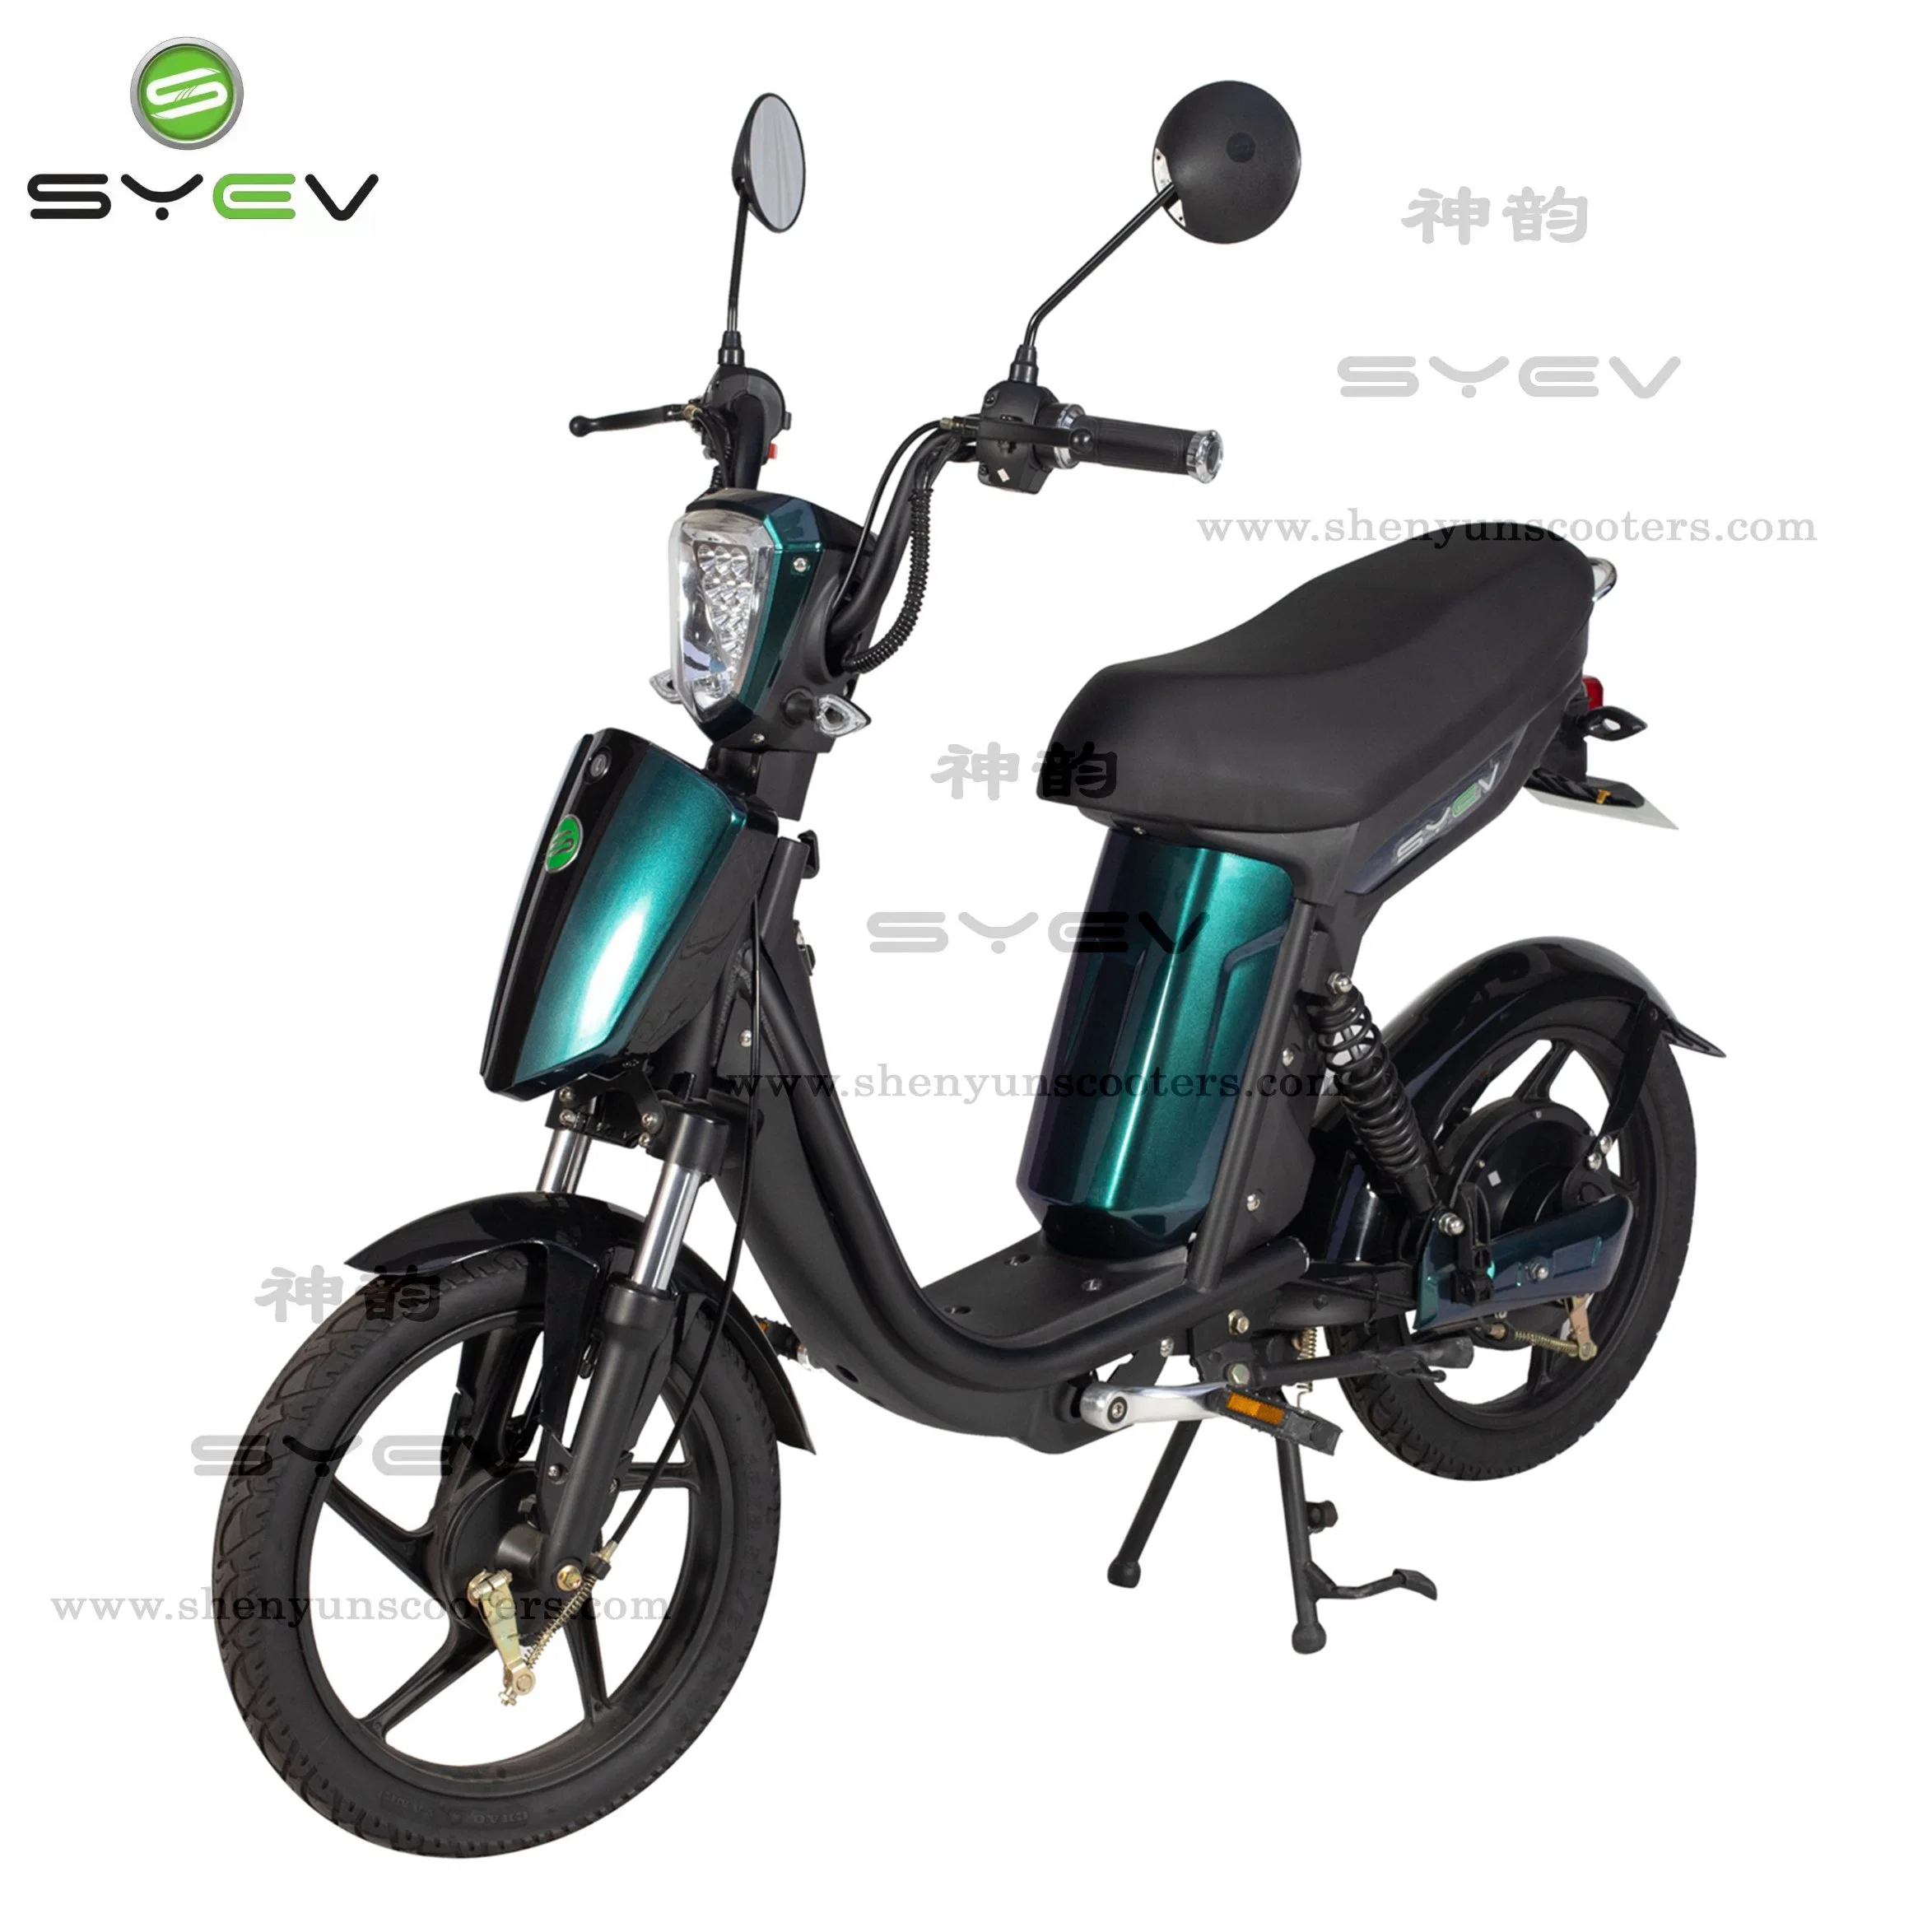 Syev низкая цена оптовой электрический скутер 350W/500W электрический велосипед с педали тормоза